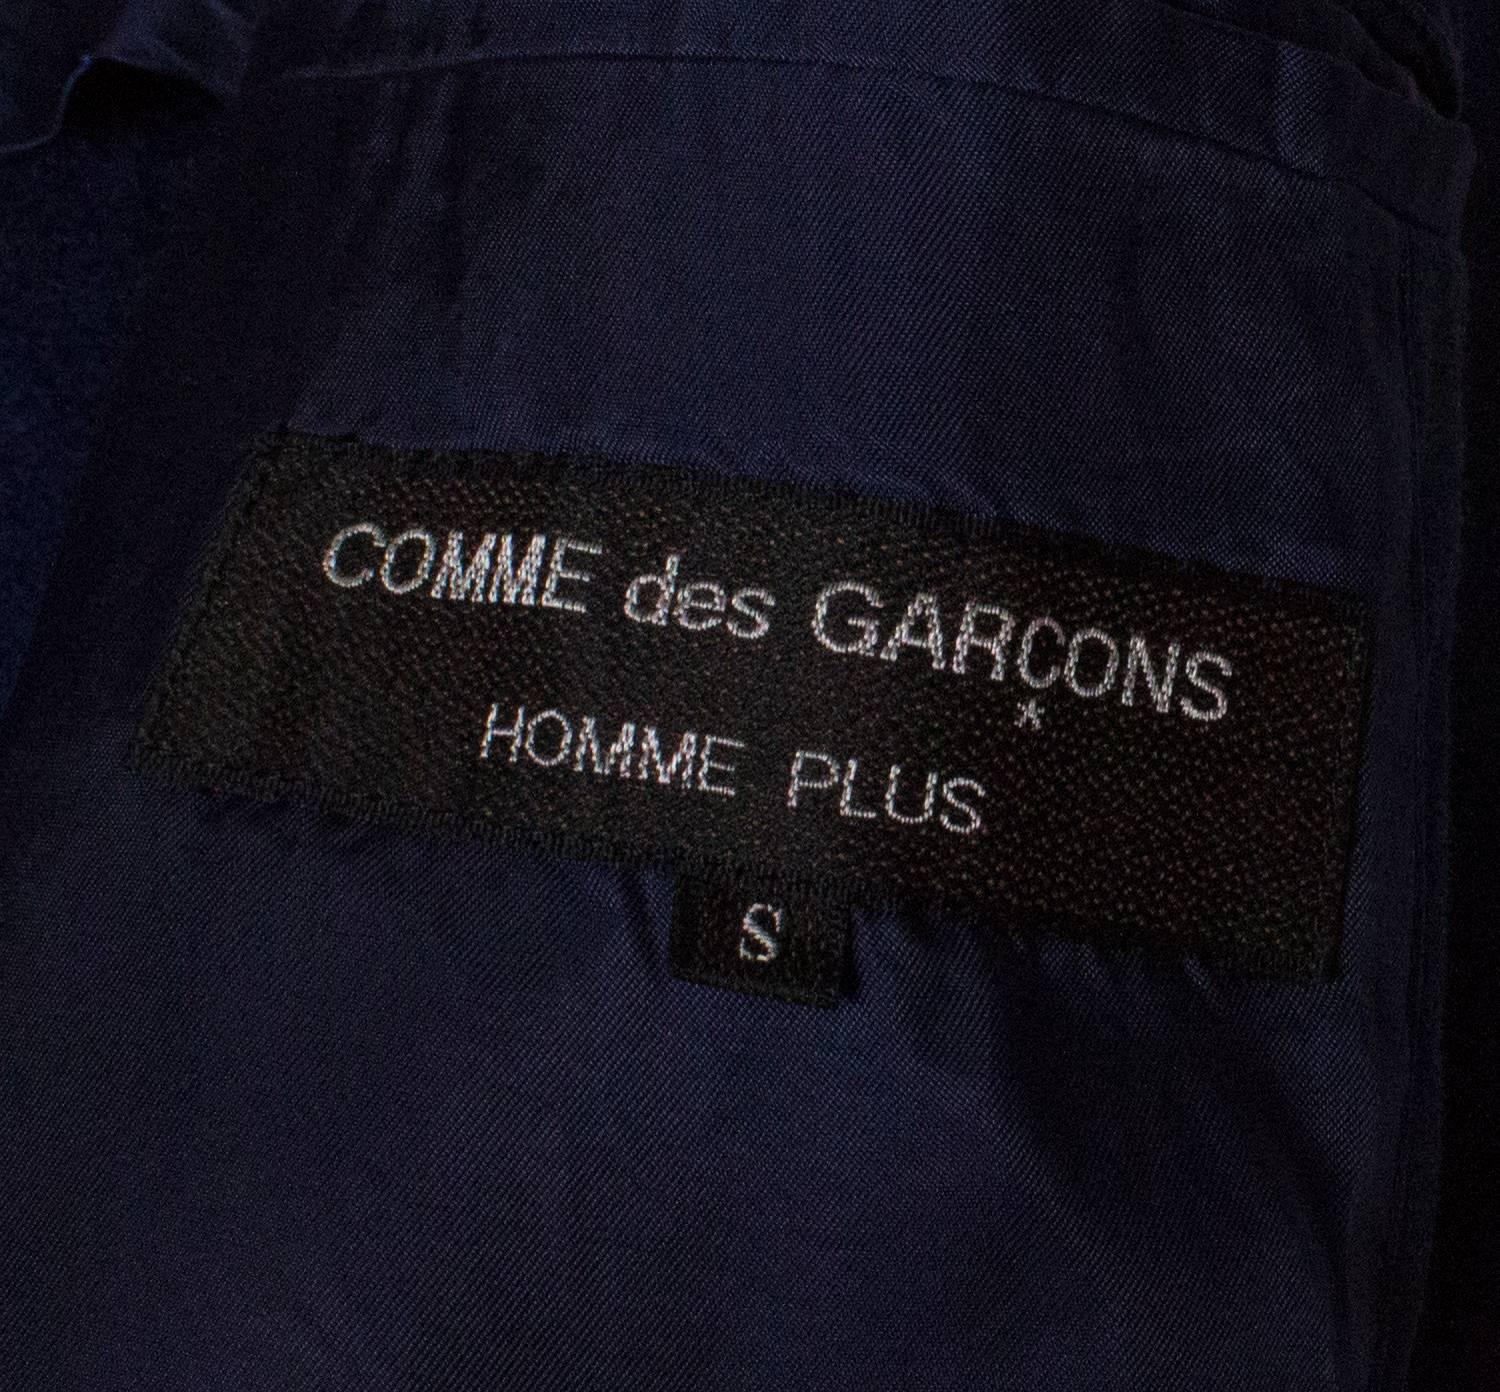 Black  Vintage Navy Comme des Garcons  Homme Plus Jacket